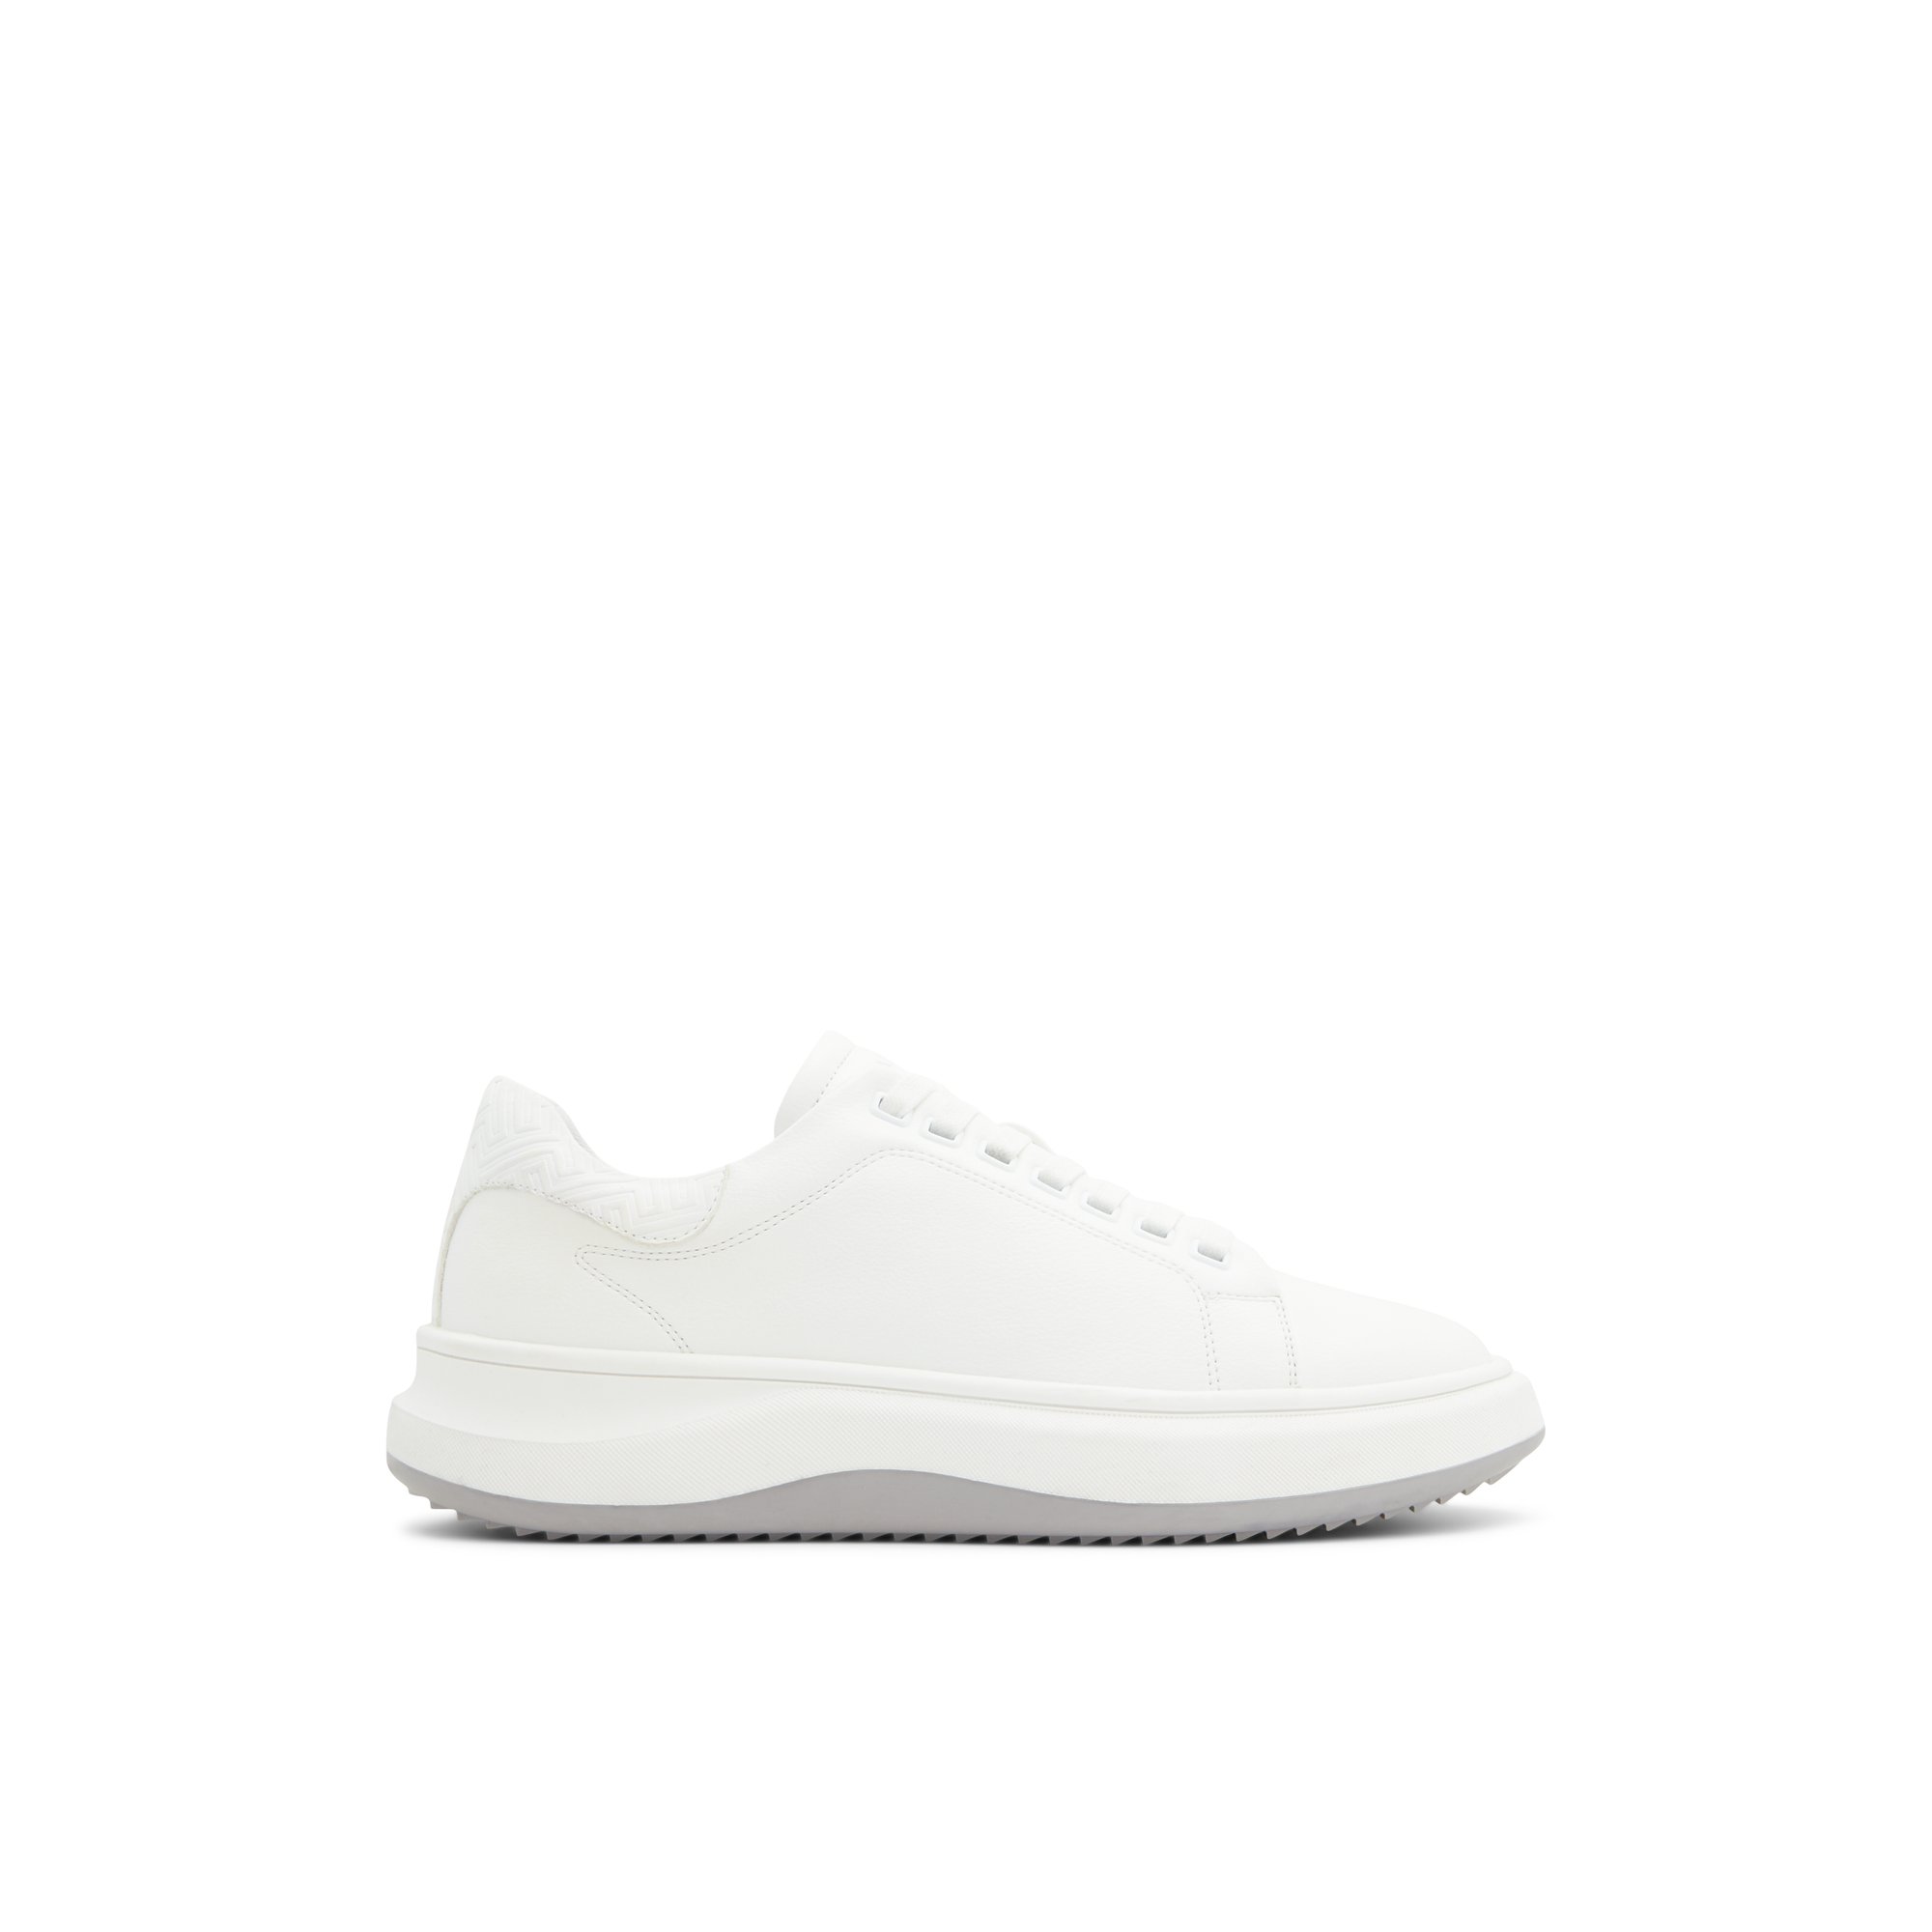 ALDO Wavespec - Men's Sneakers Low Top - White